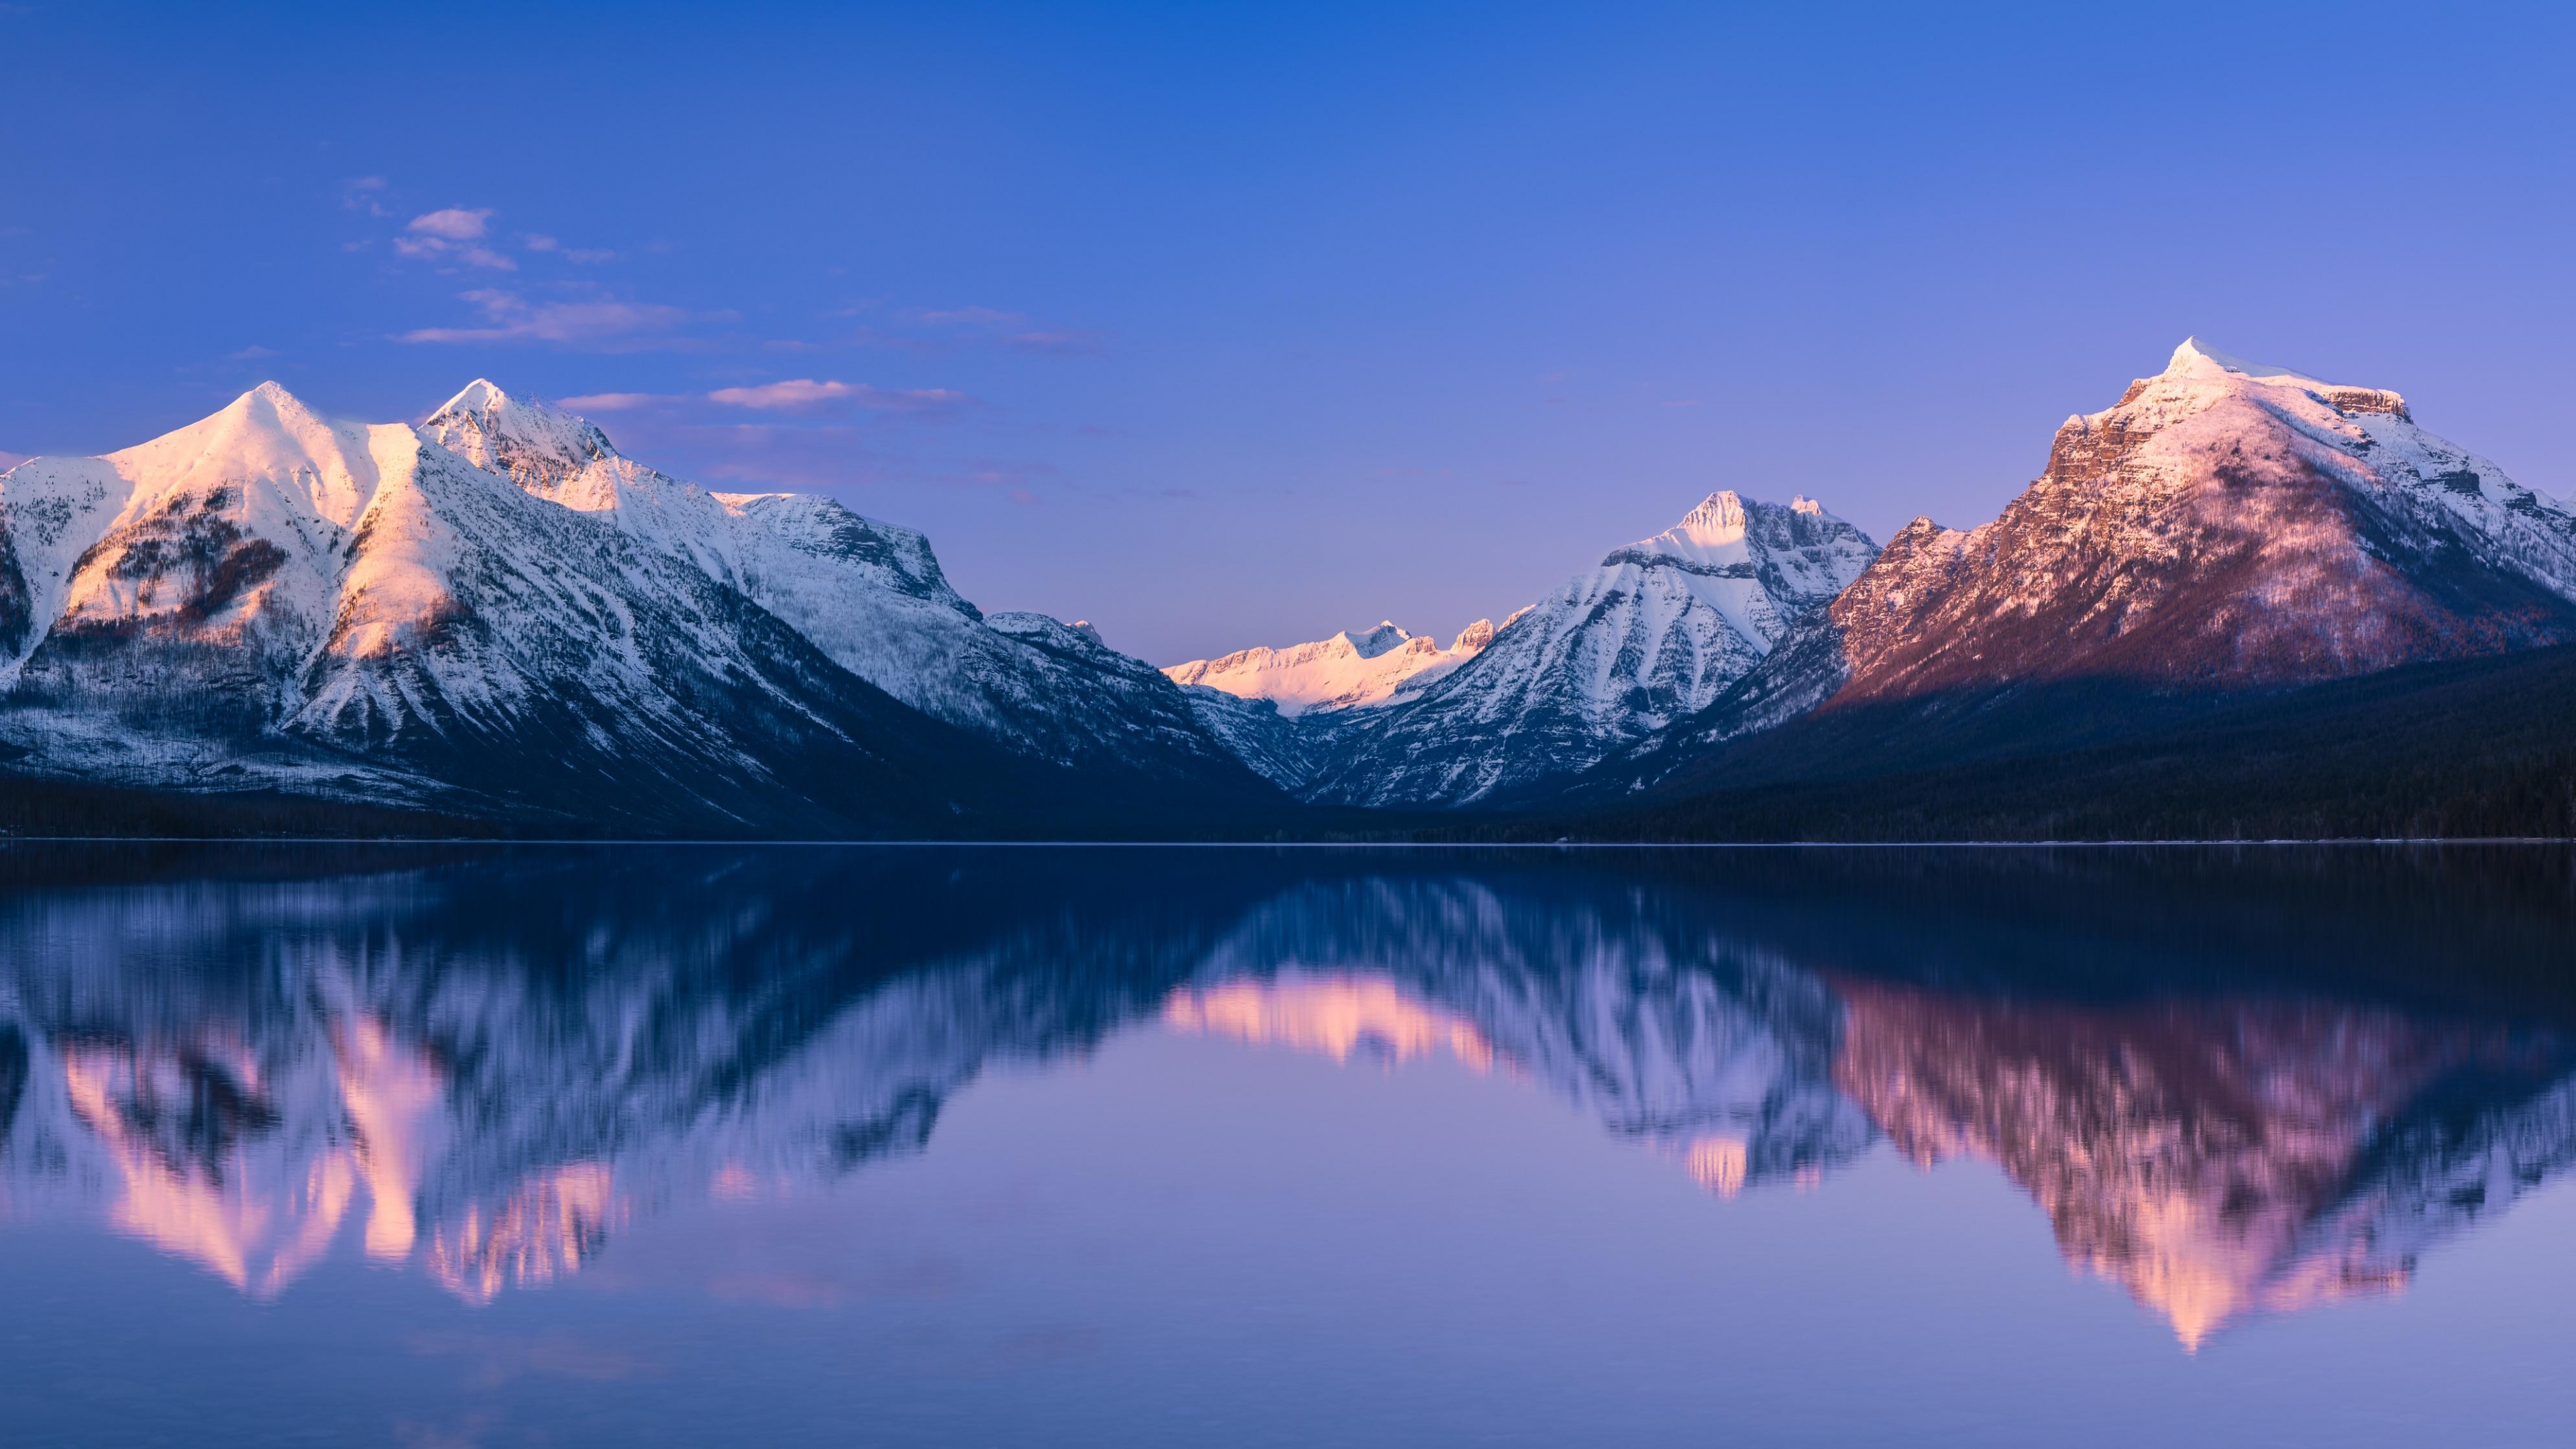 Glacier Park beauty, McDonald Lake, Snowy nature, 4K wallpaper, 3840x2160 4K Desktop